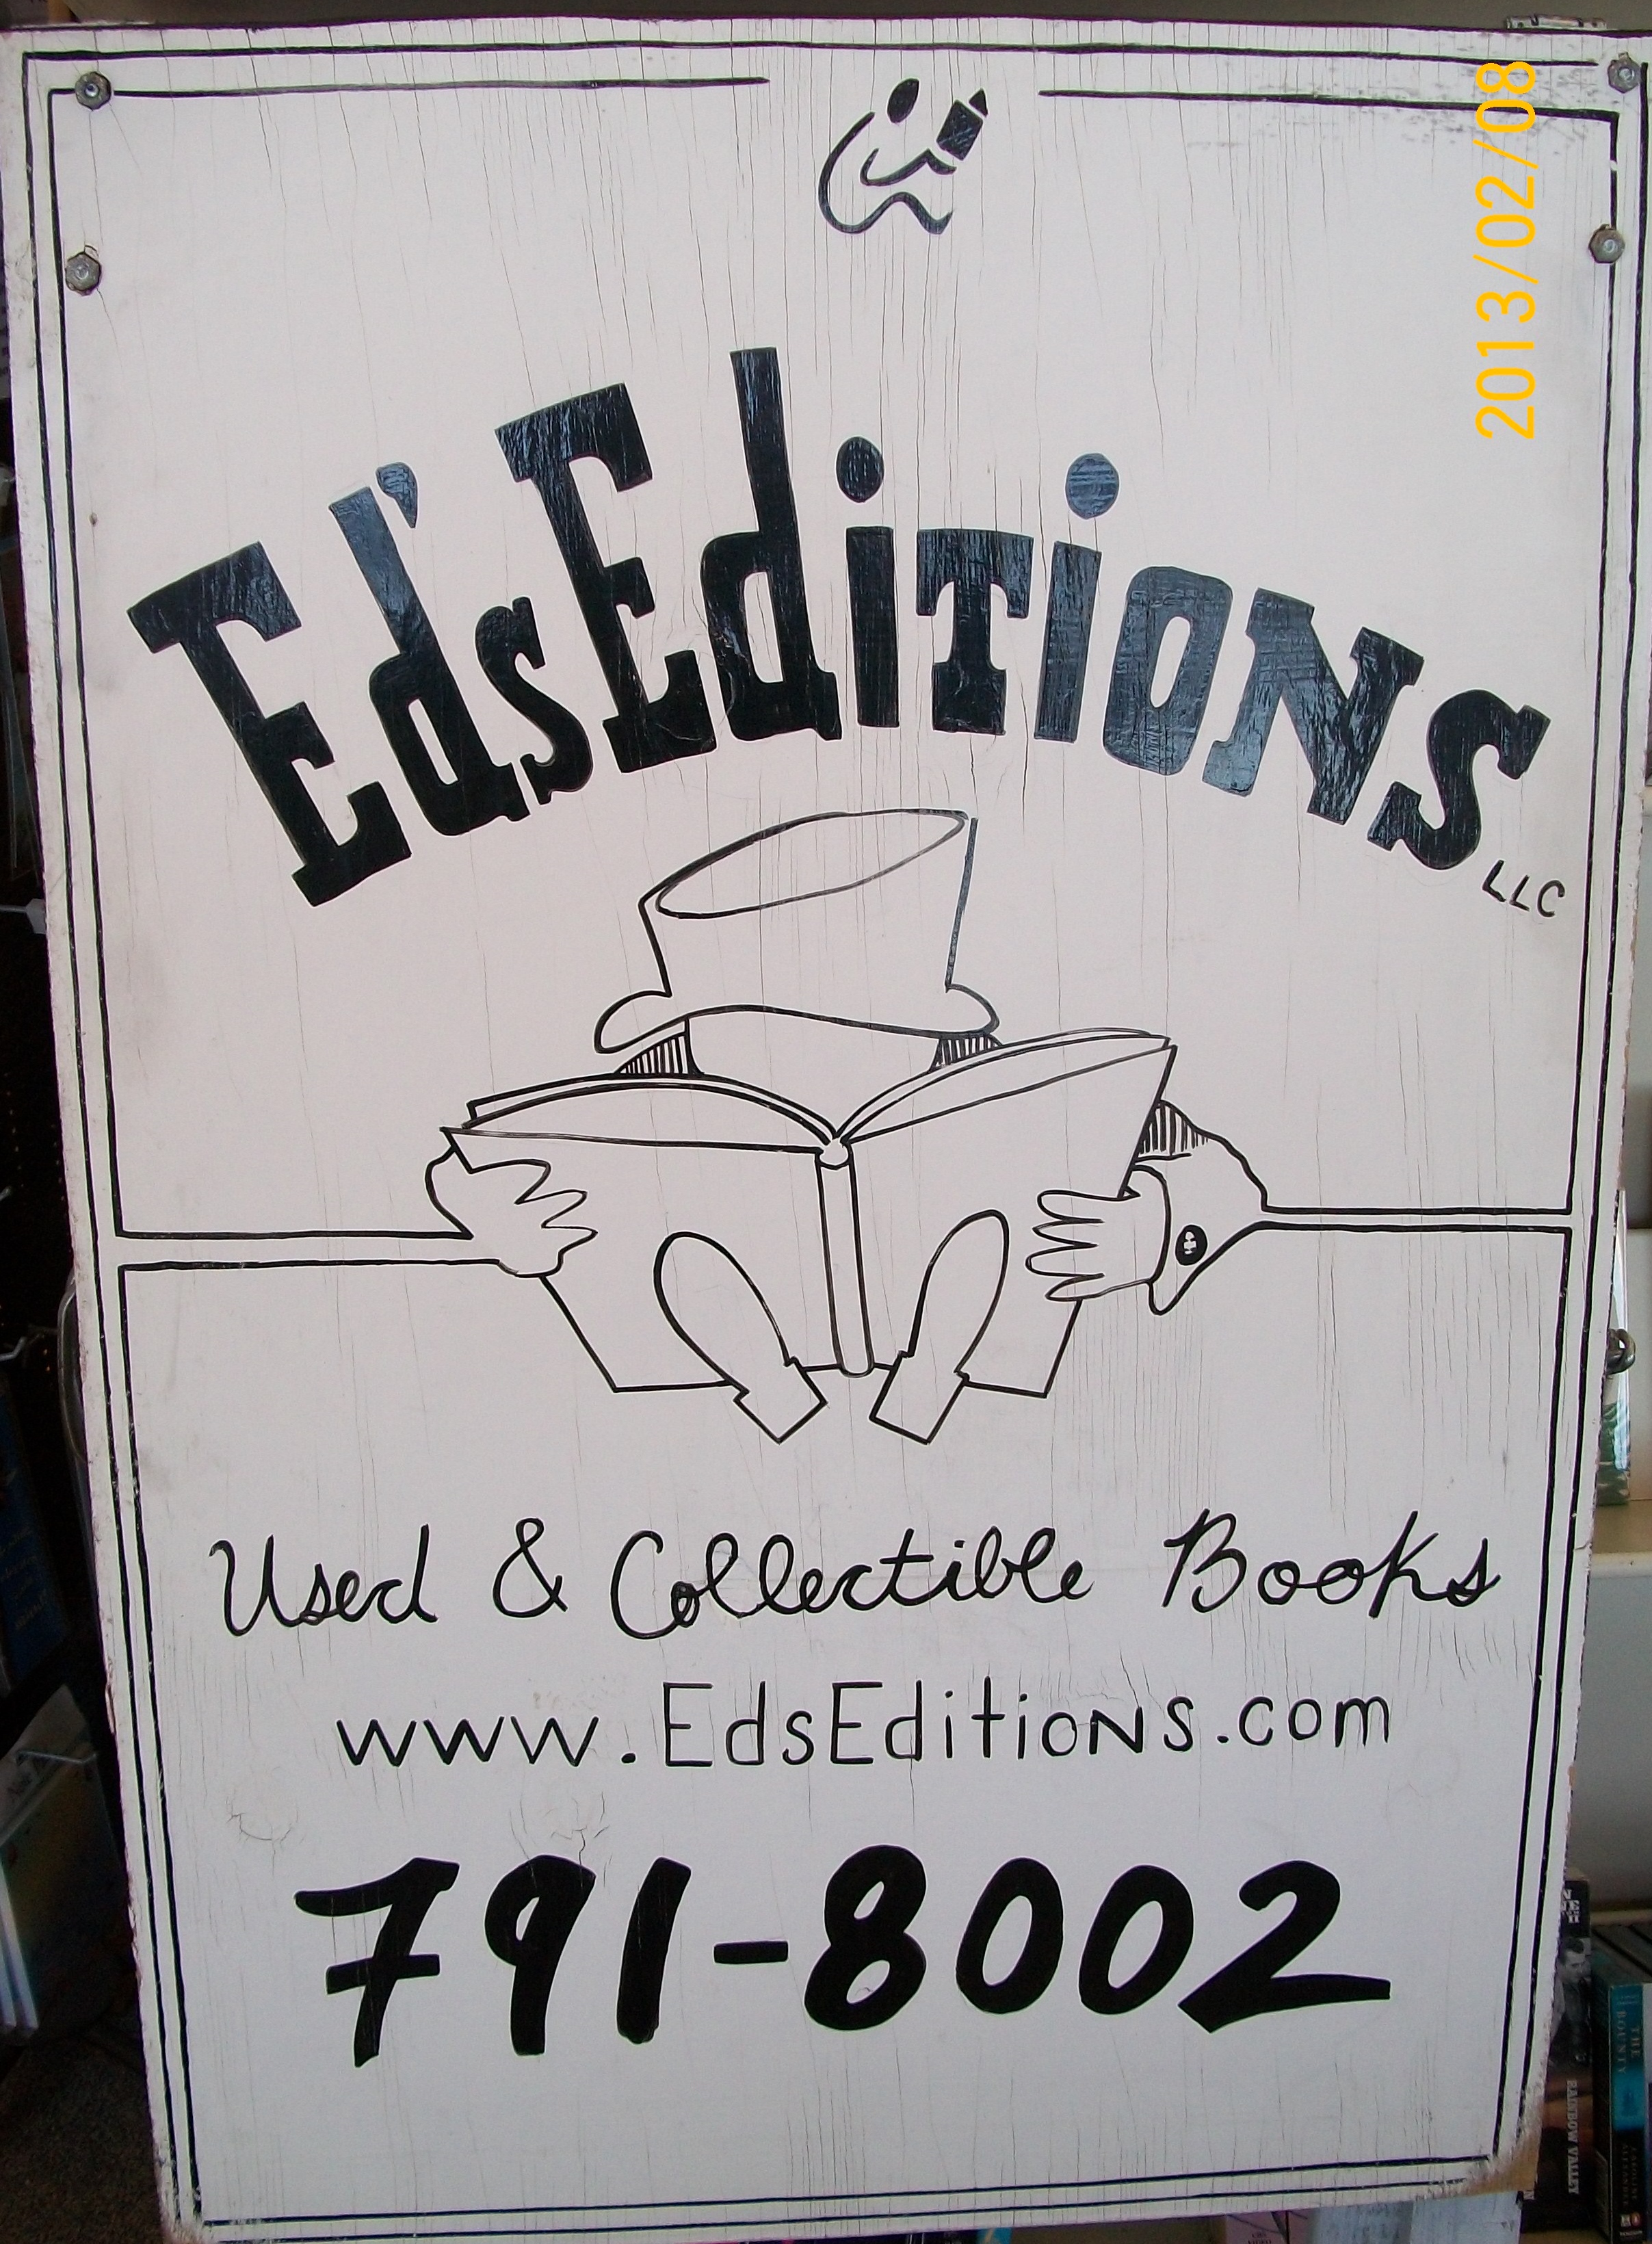 Ed's Editions, LLC